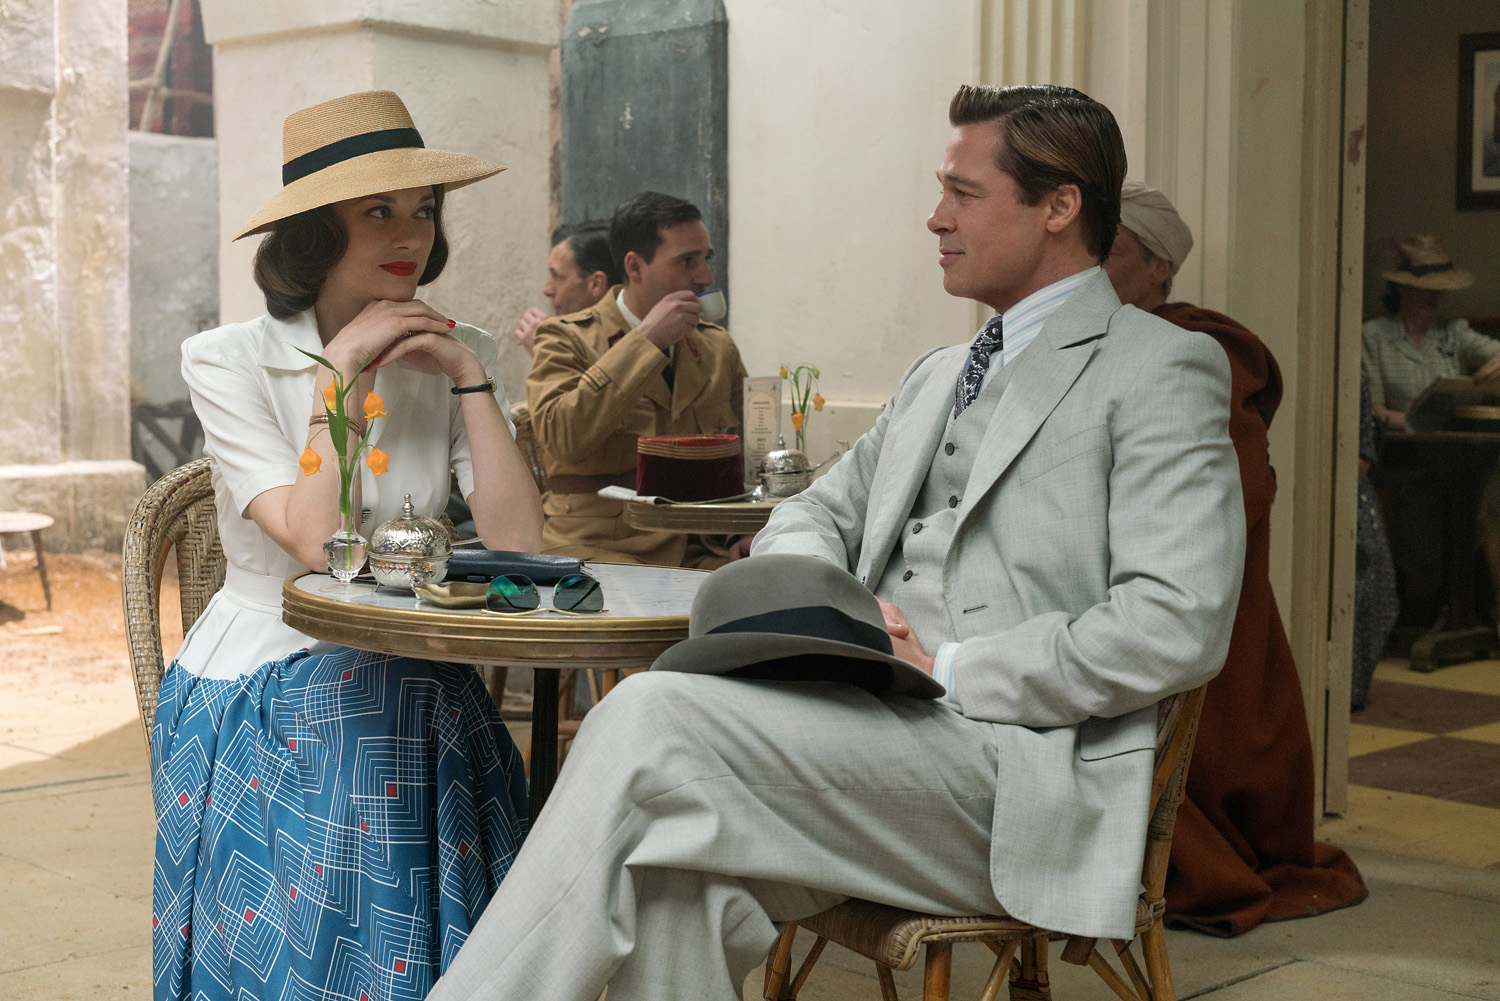 Pitt, Cotillard are spies in love in first trailer of “ALLIED”